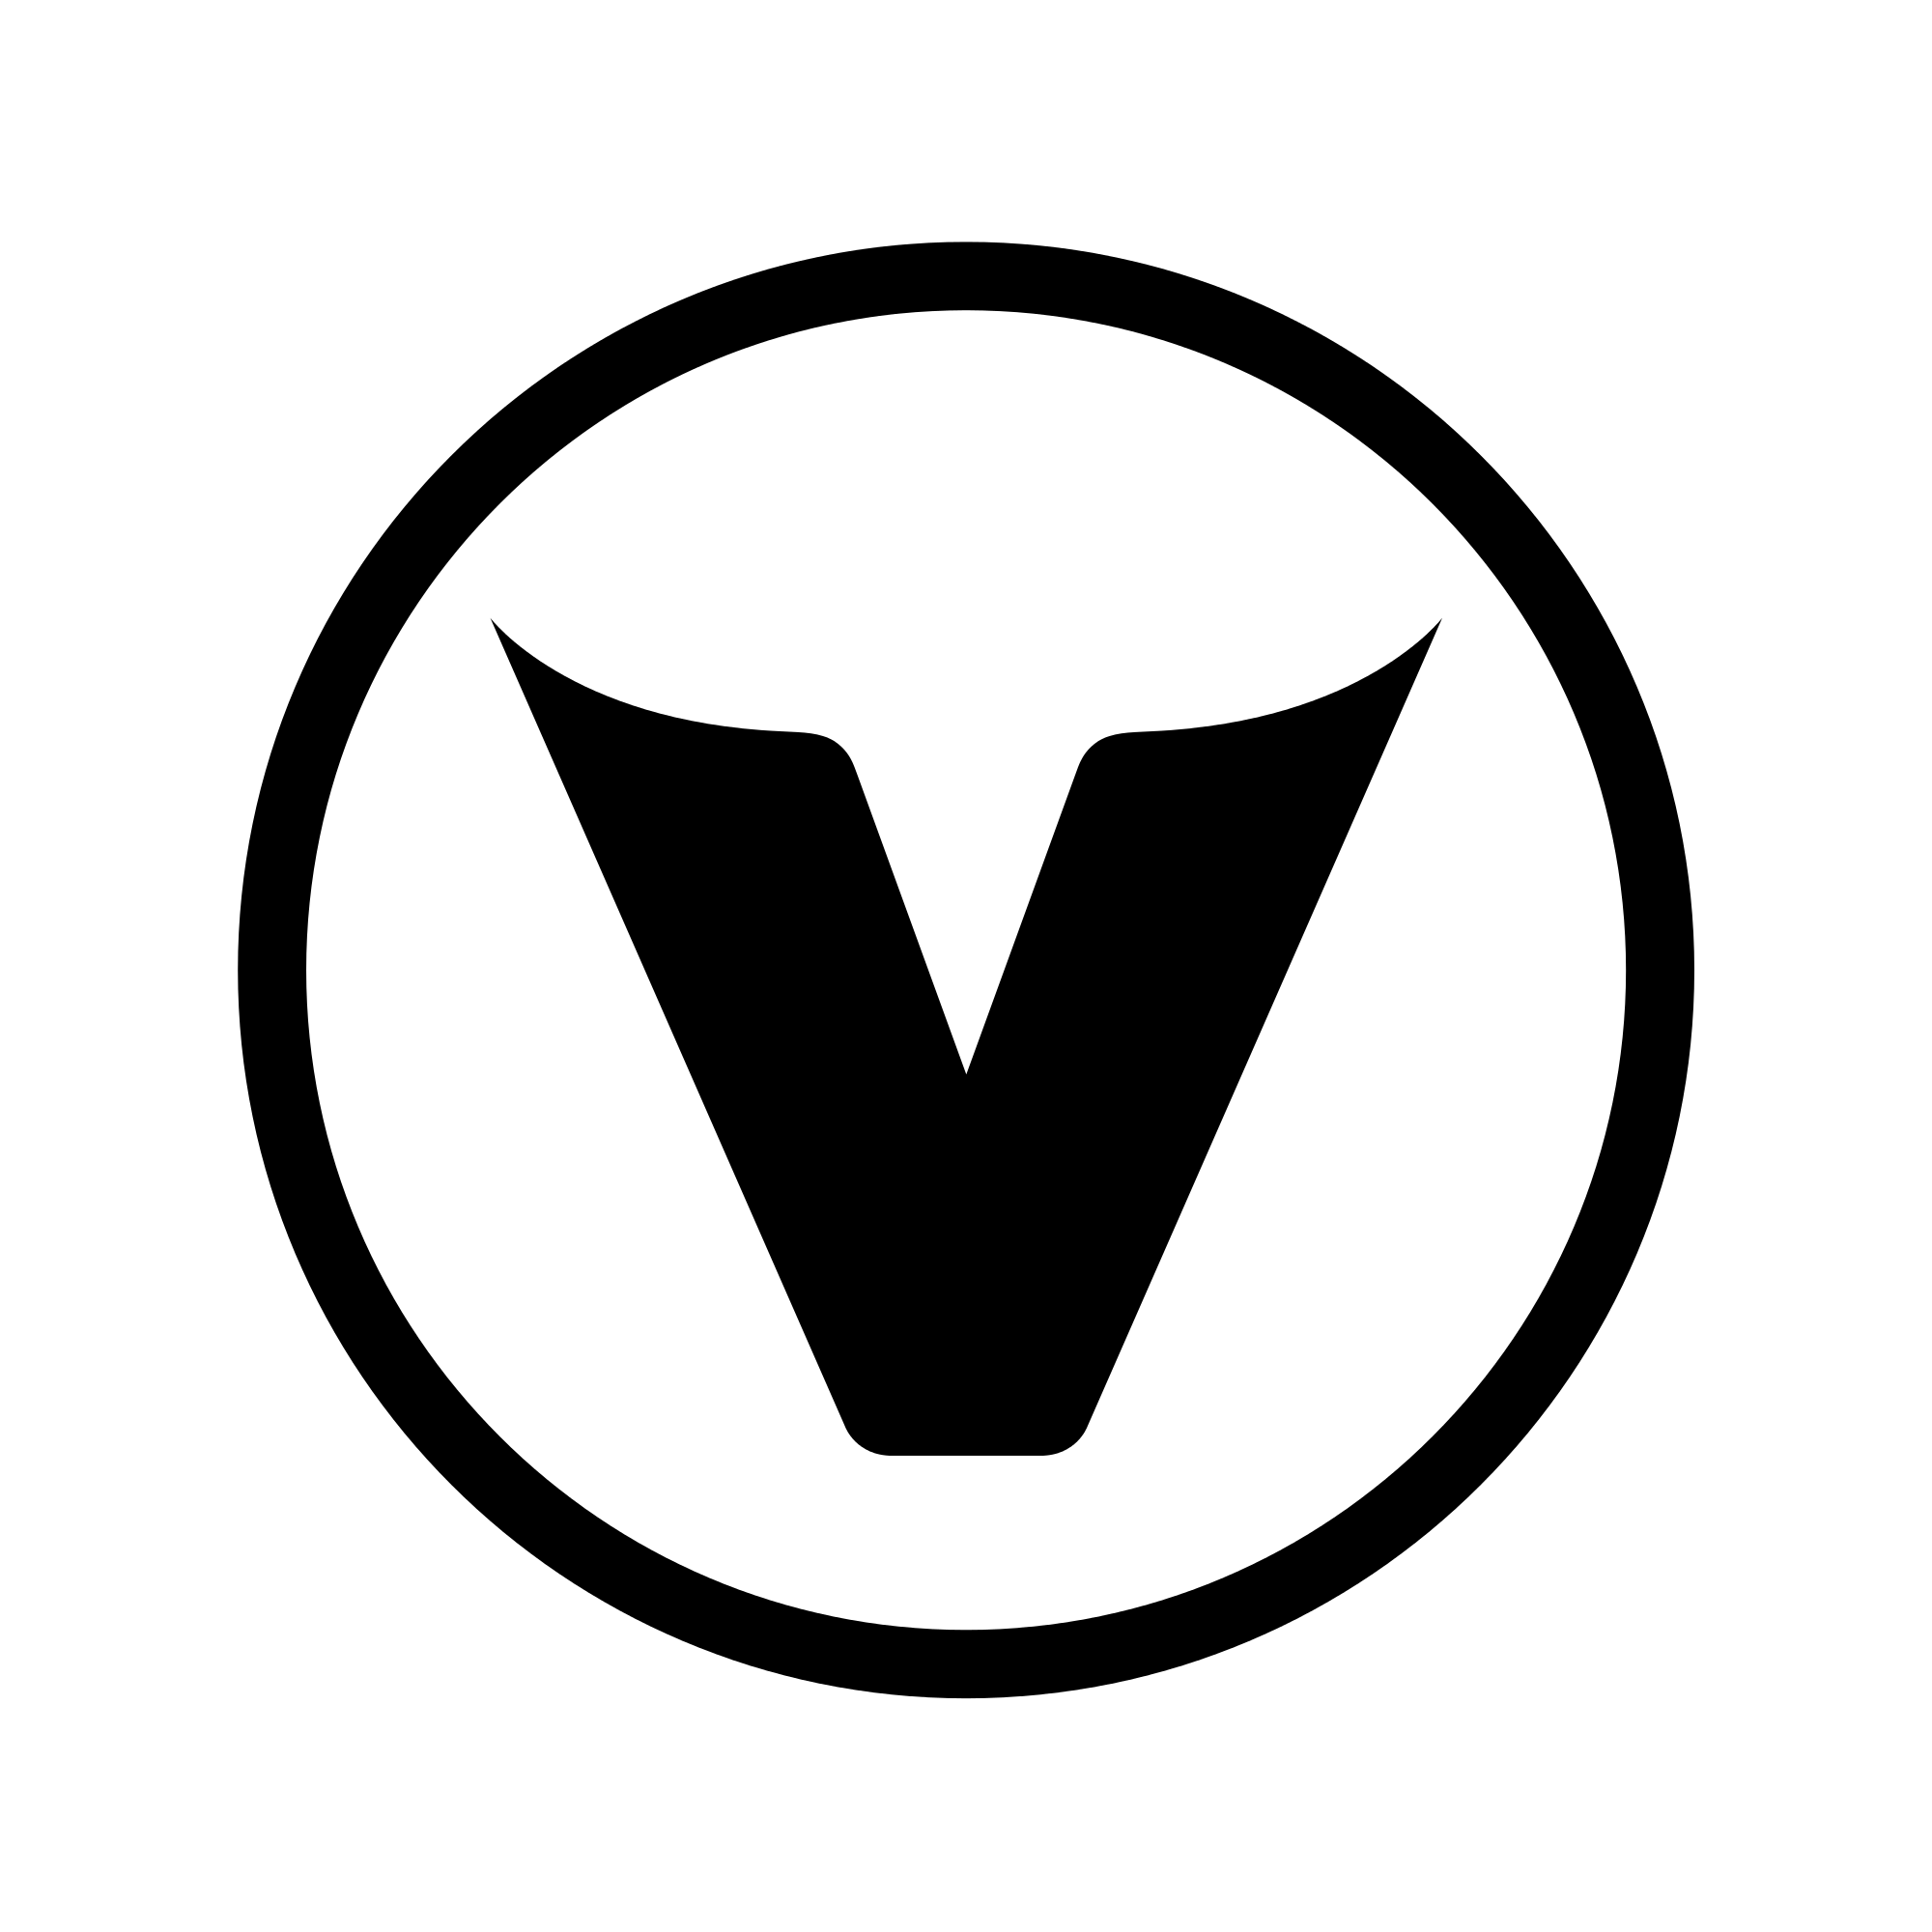 Cool V Logo - File:V (logo 2010).svg - Wikimedia Commons